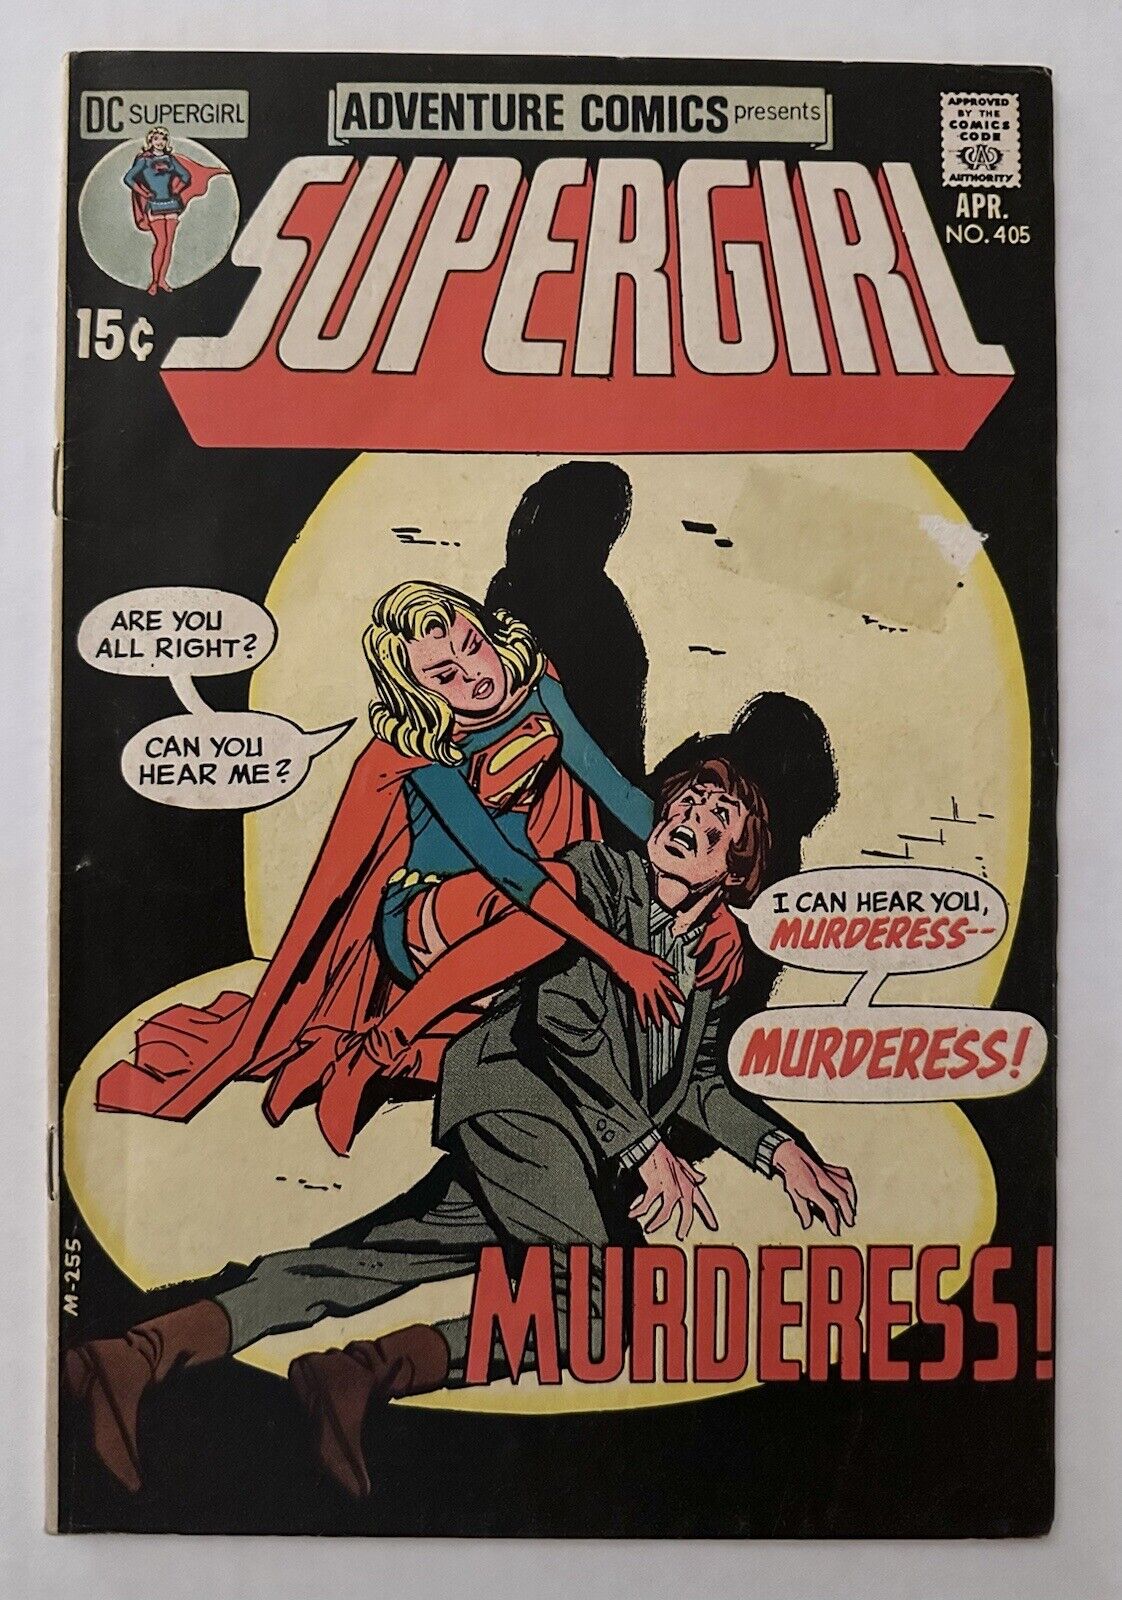 Adventure Comics Supergirl 405 - Bronze Age DC 1971 - Mike Sekowsky cover